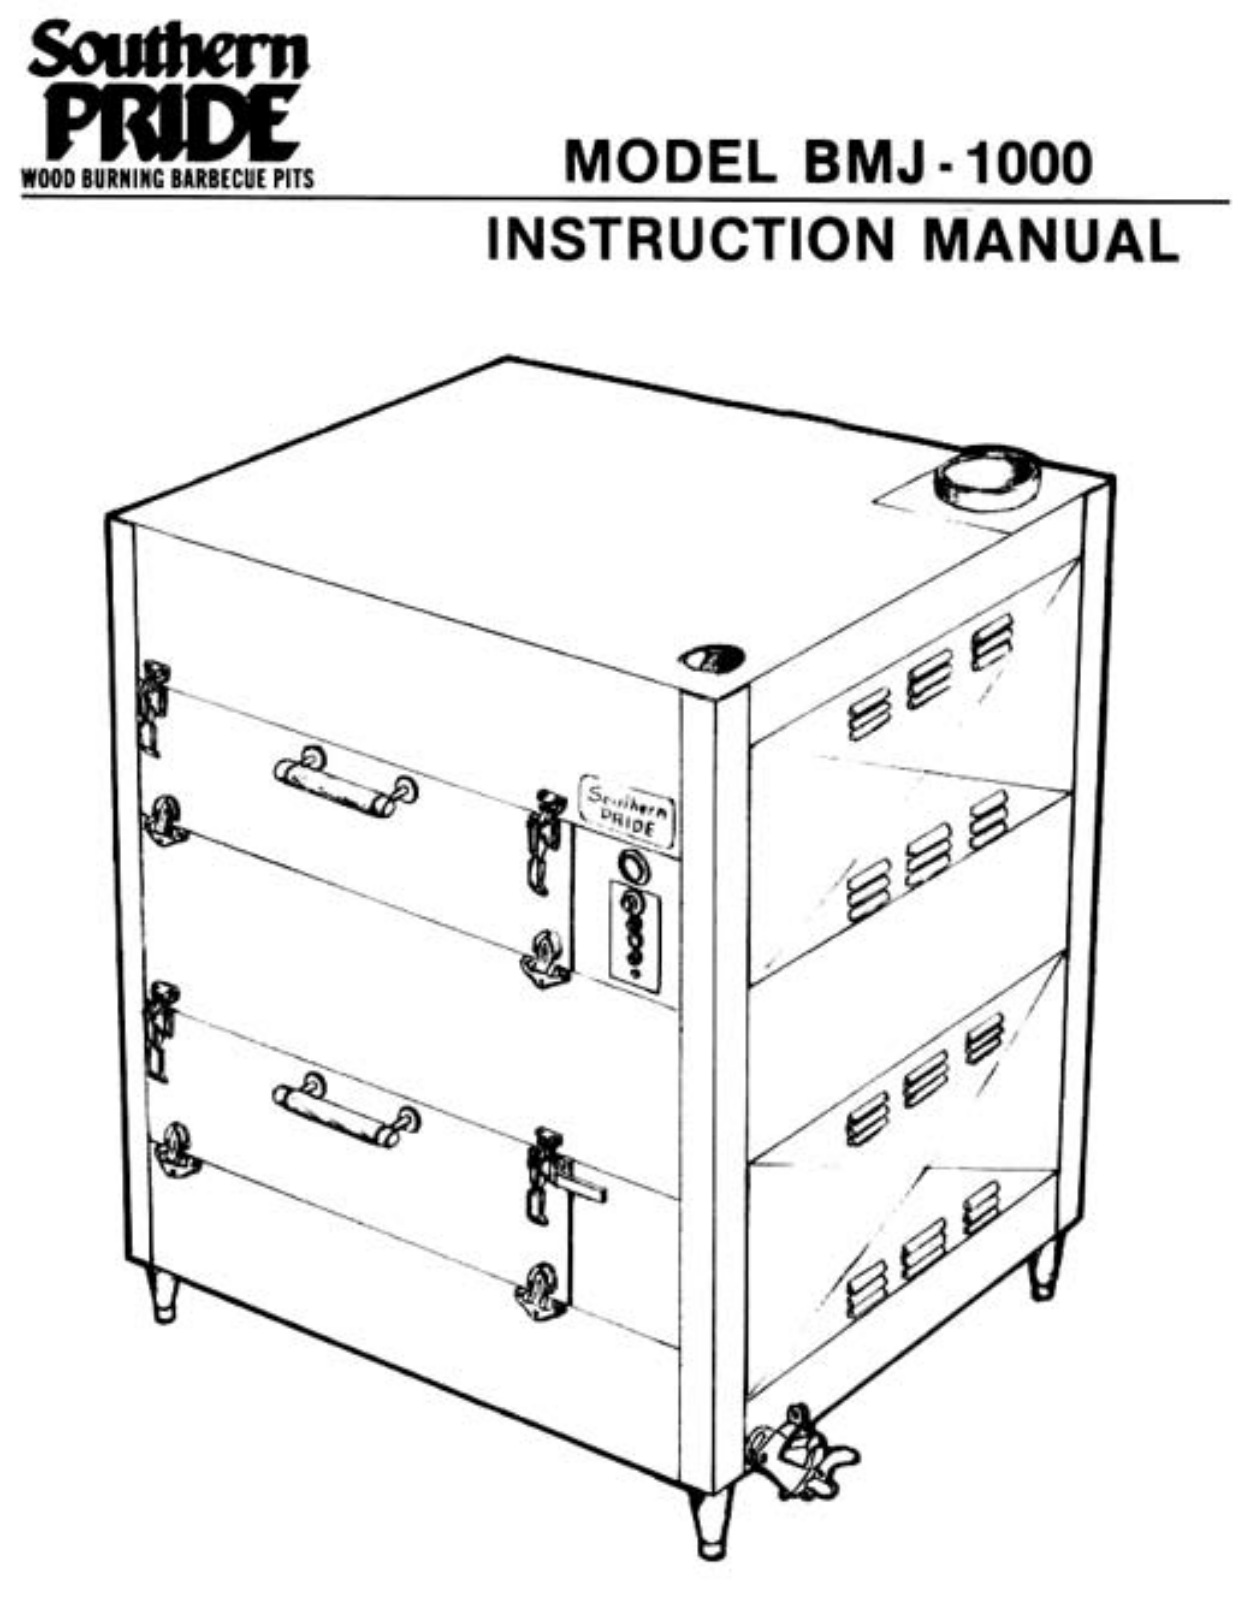 Southern Pride BMJ-1000 Installation  Manual